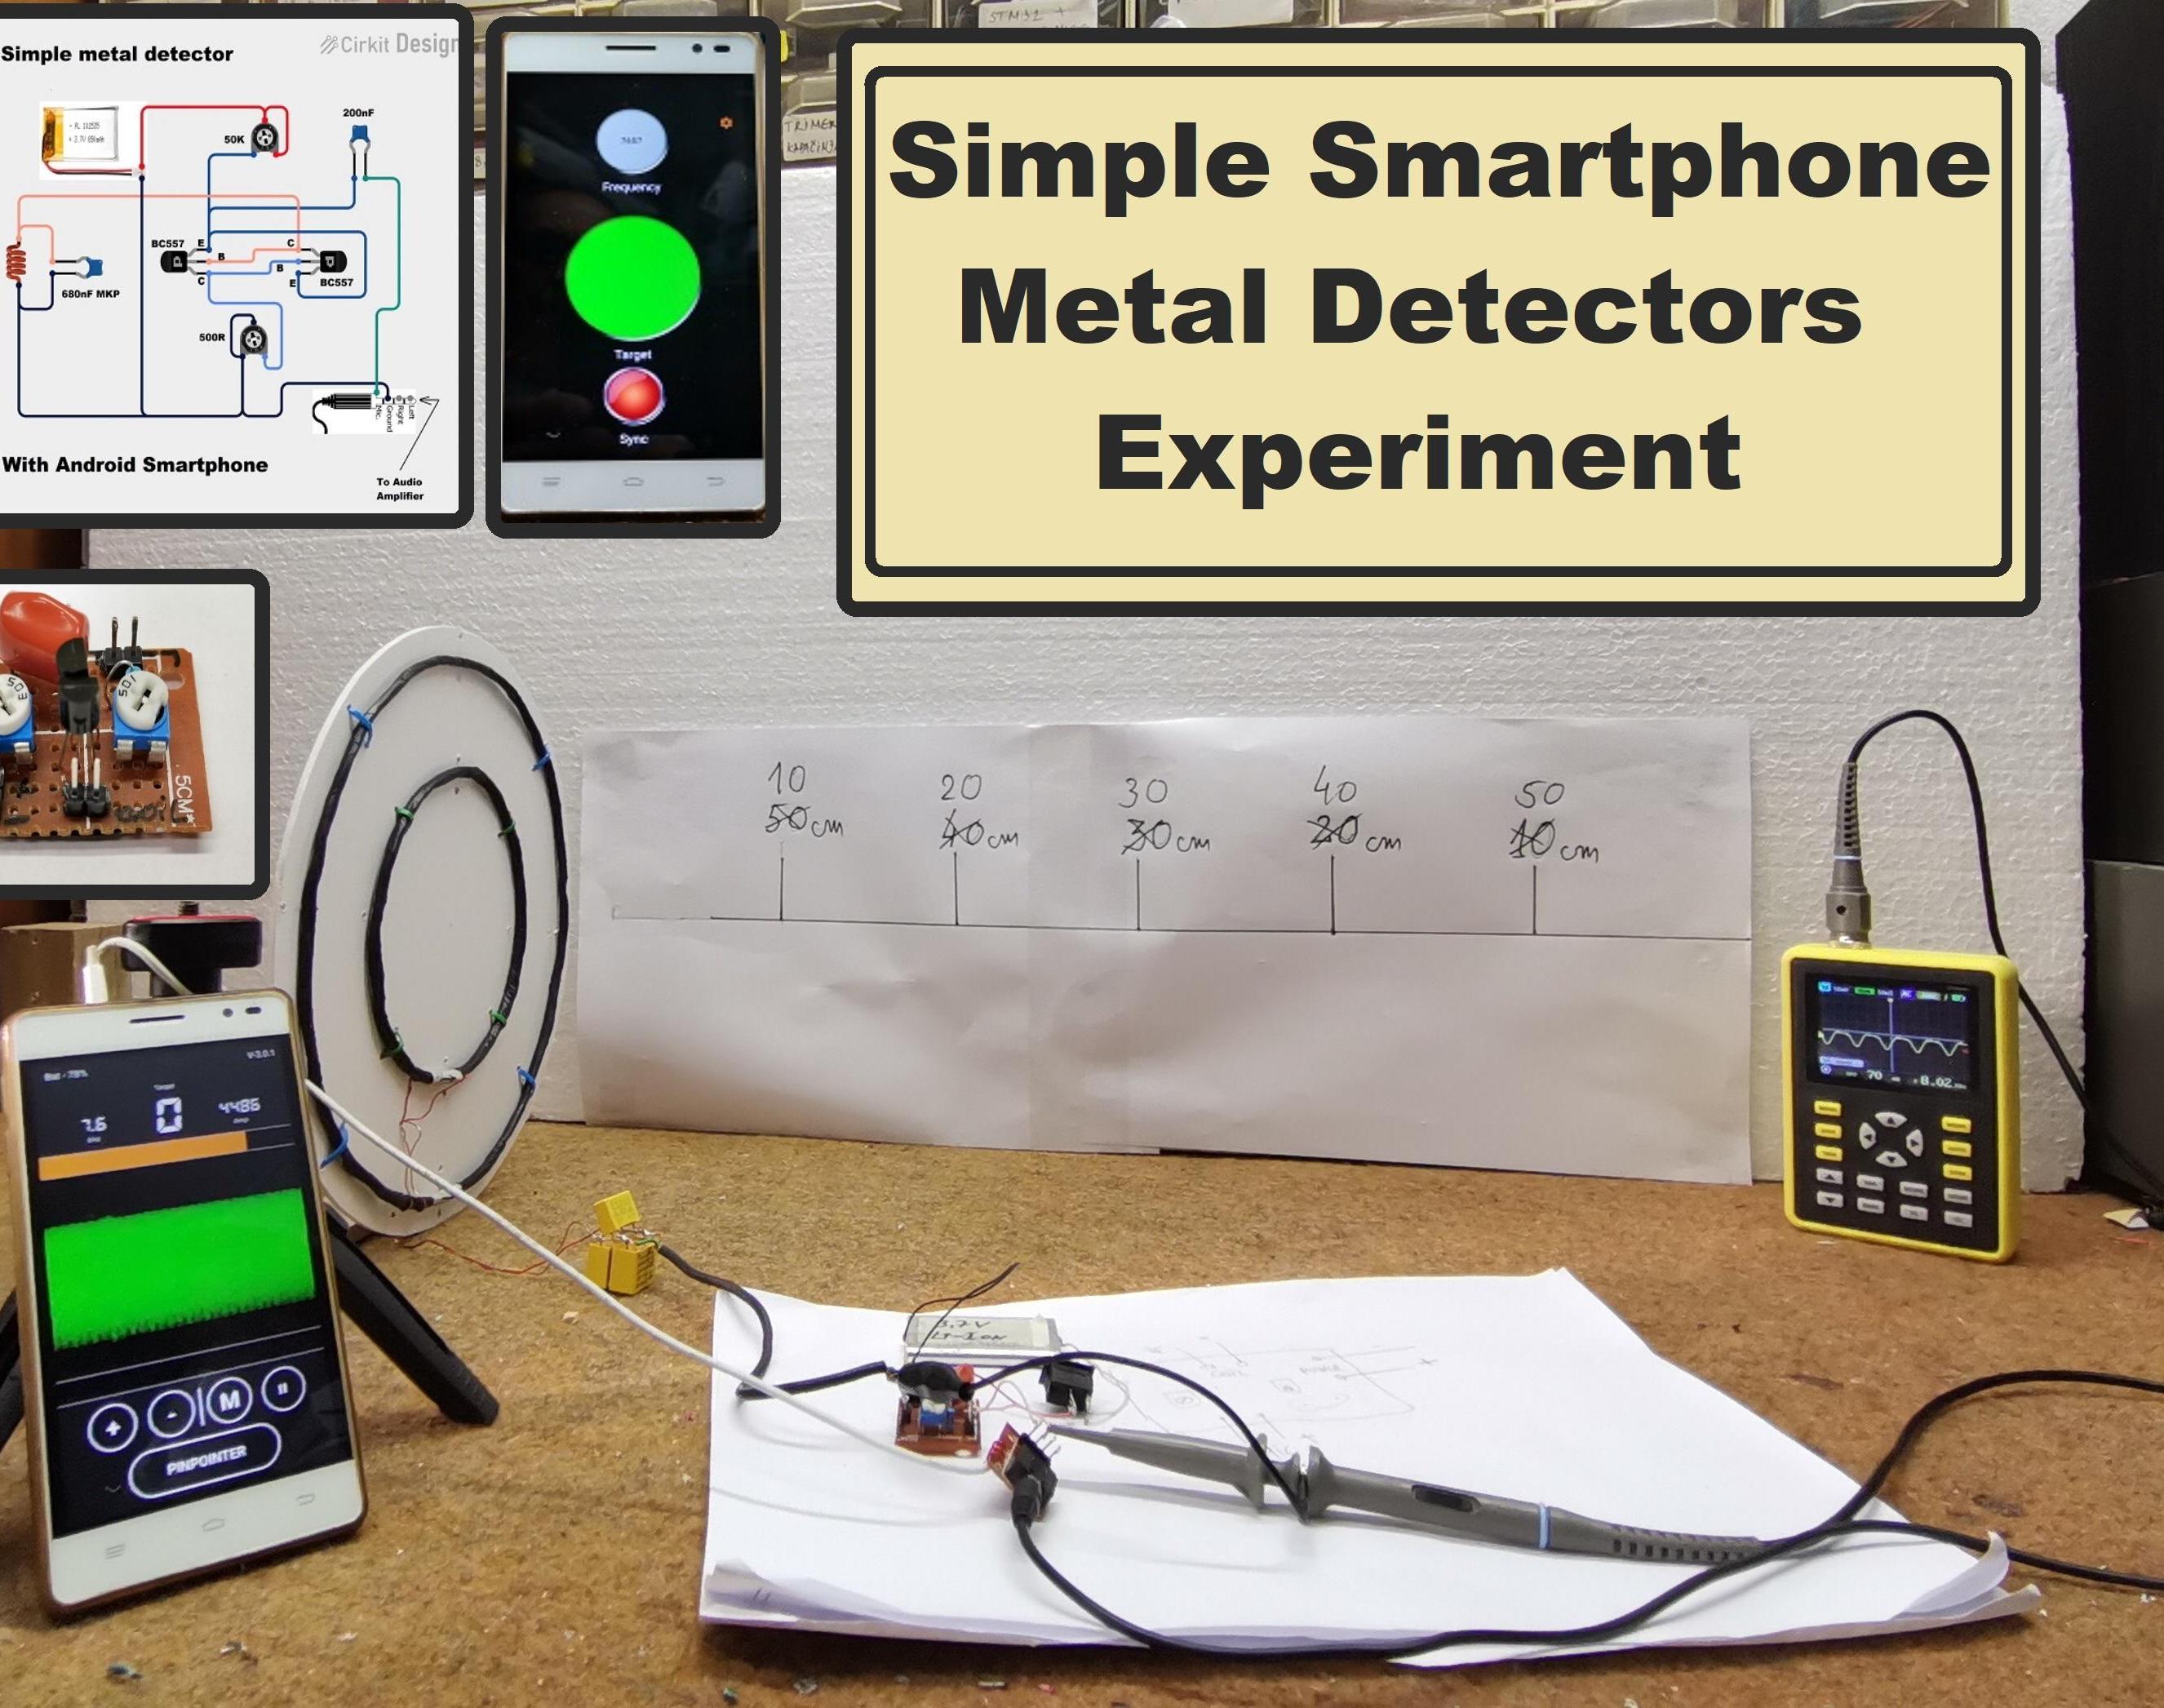 Simple Smartphone Metal Detector Experiments